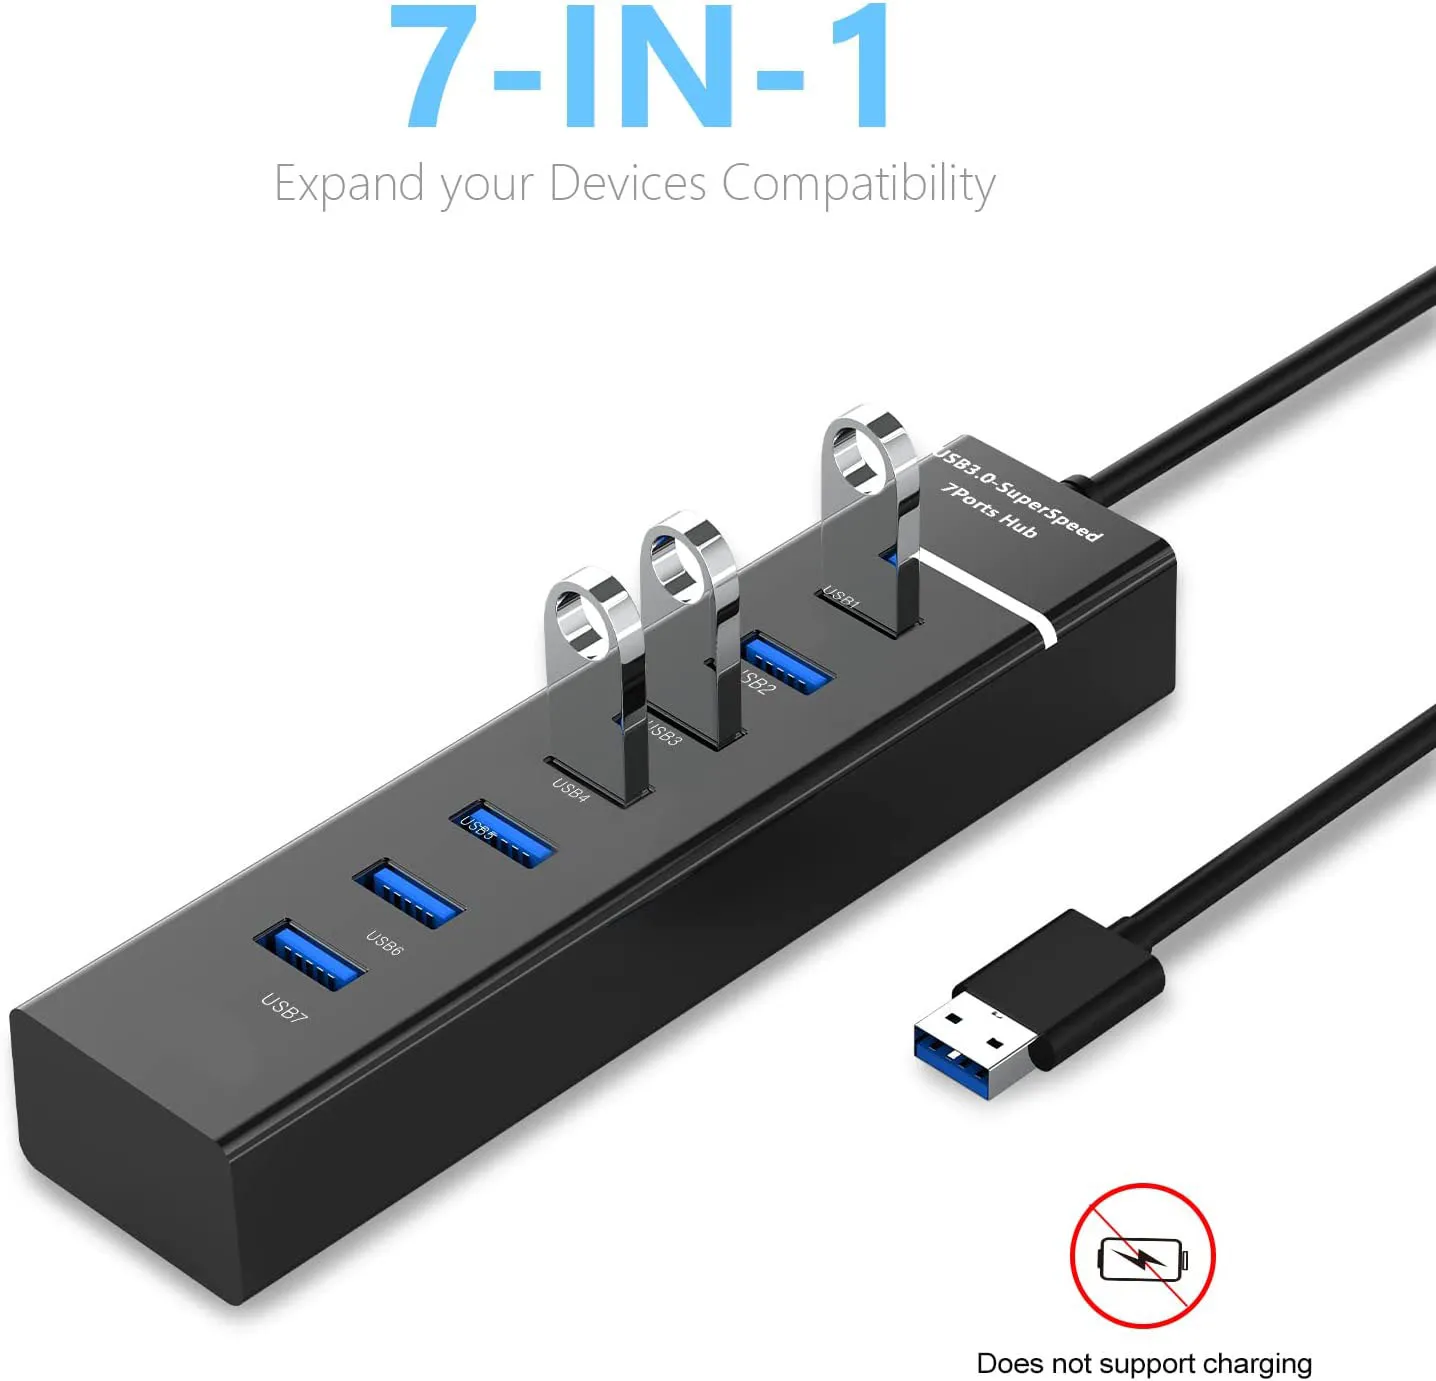 

USB 3.0 4/7 Ports Data Hub Splitter Adapter Cable length 30/120cm For Desktop PC Mac Laptop Keyboard mouse 2TB Mobile hard disk